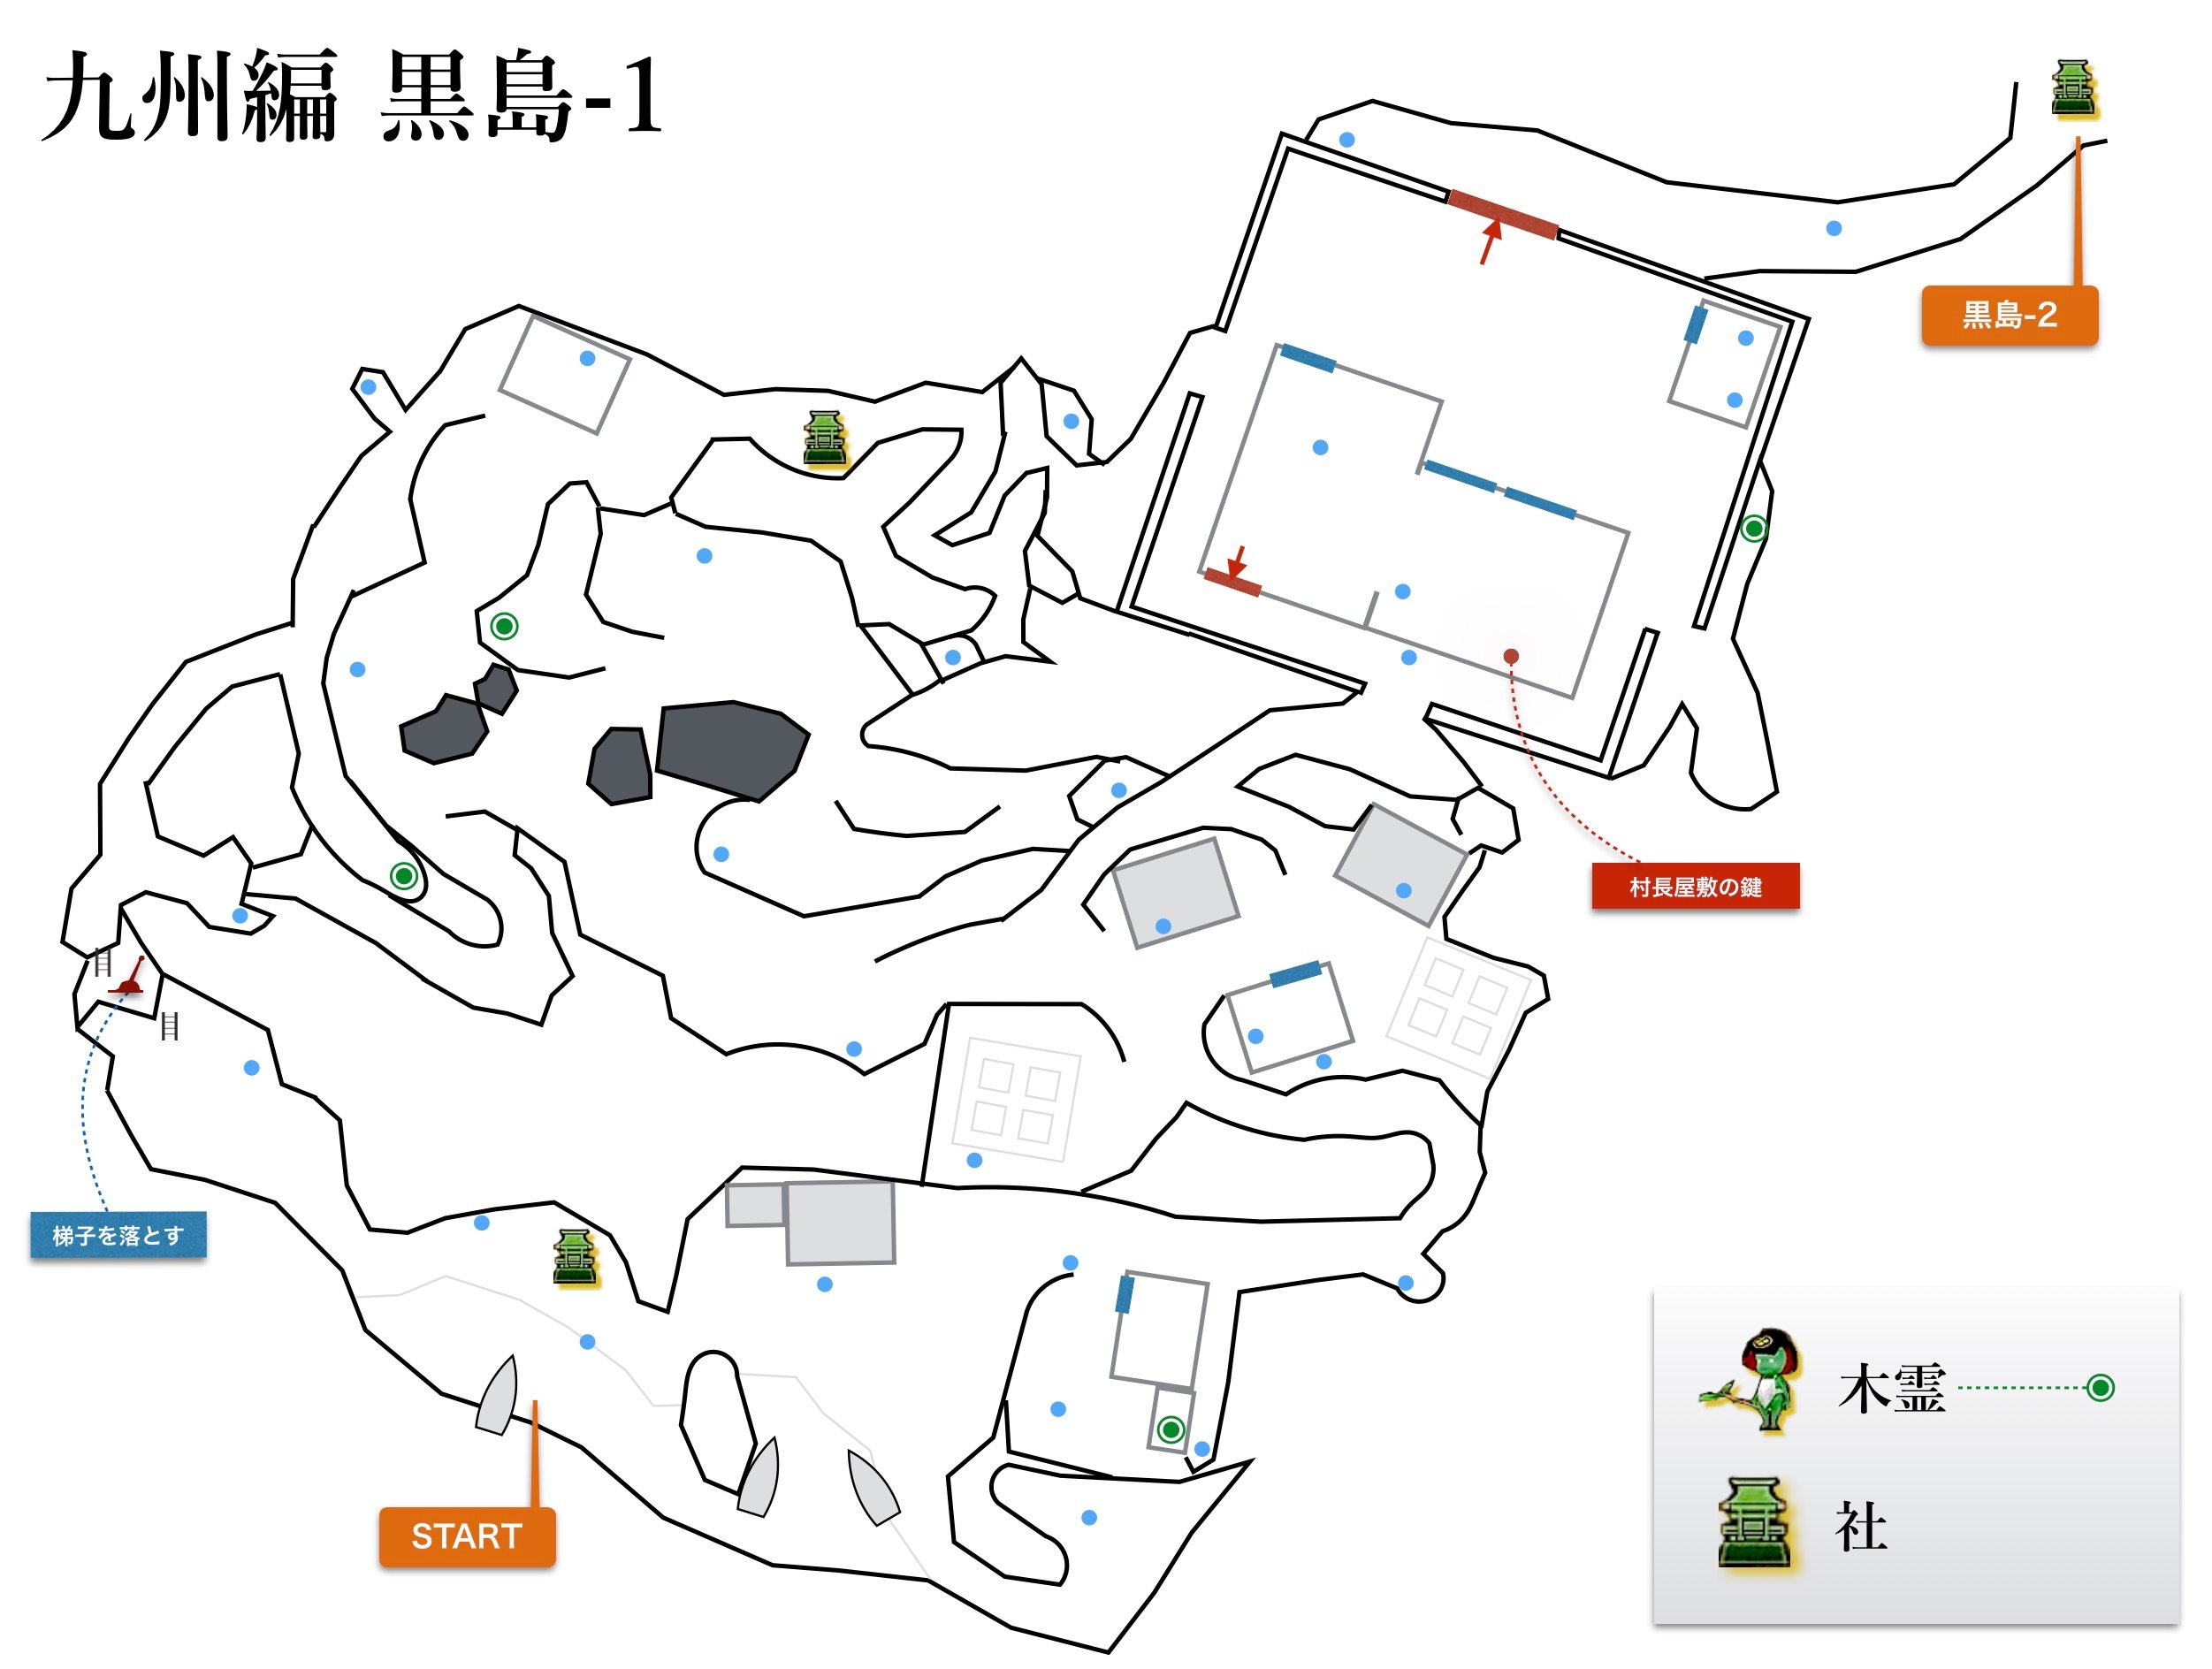 NIOH MAP2 1